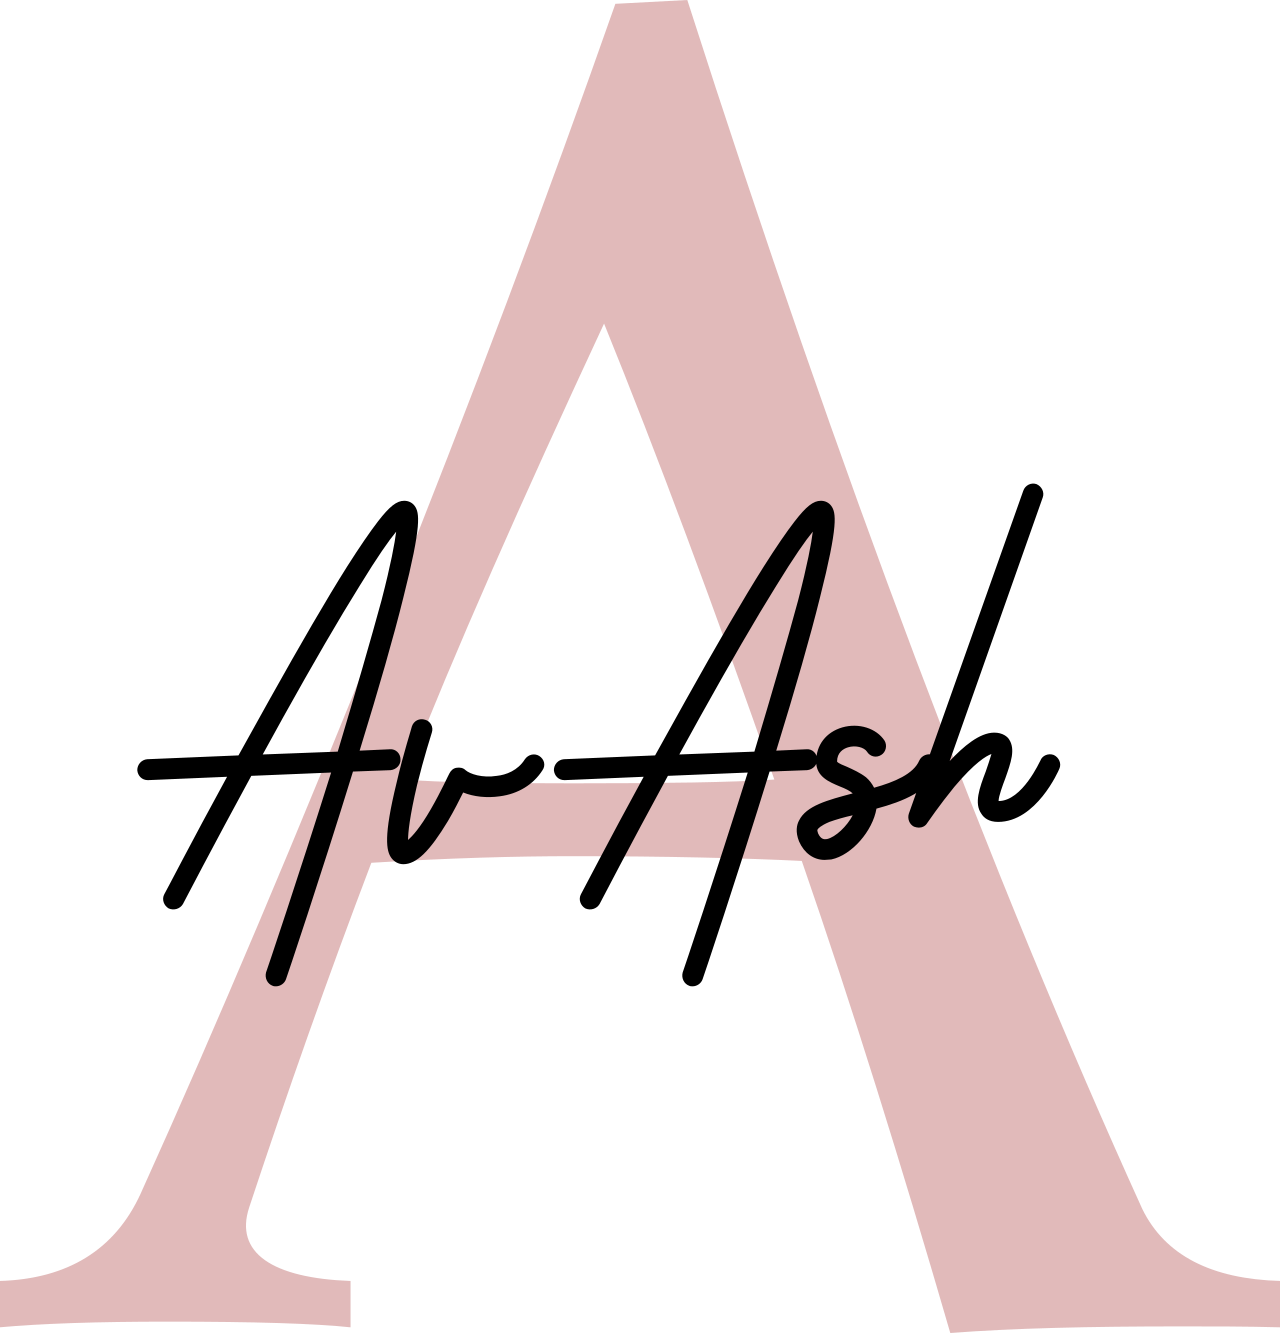 AvAsh 's logo